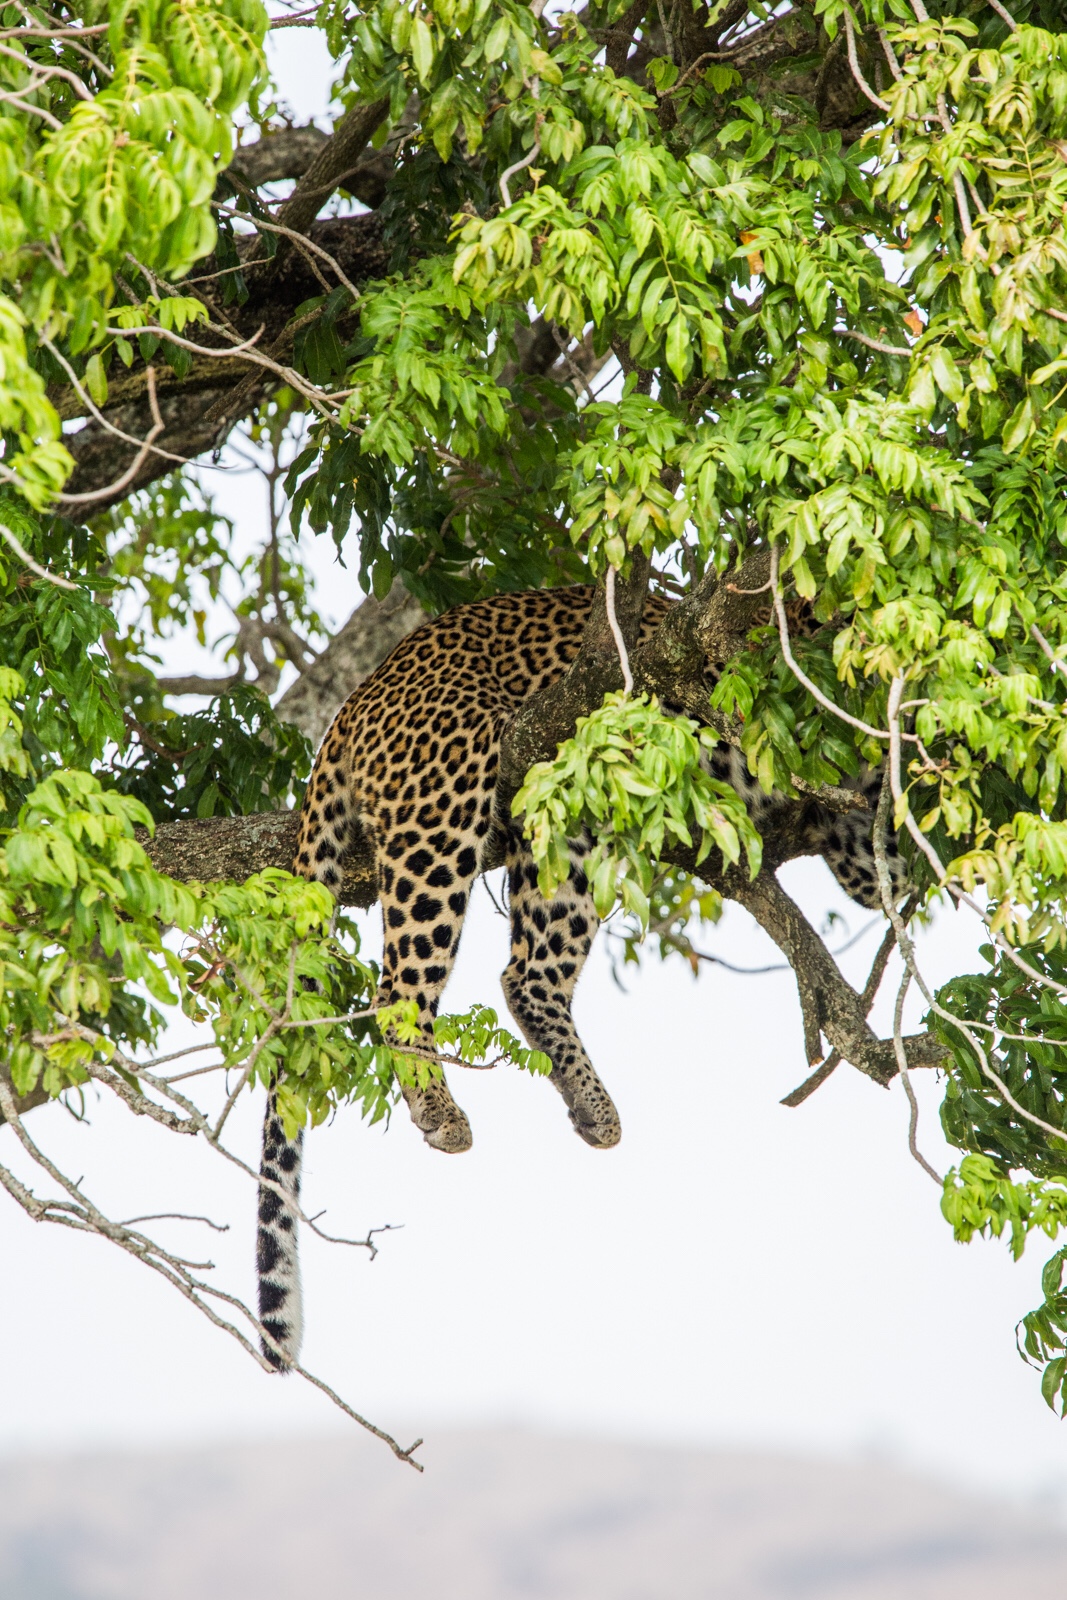 The elusive leopard hanging in the tree in Maasai Mara.